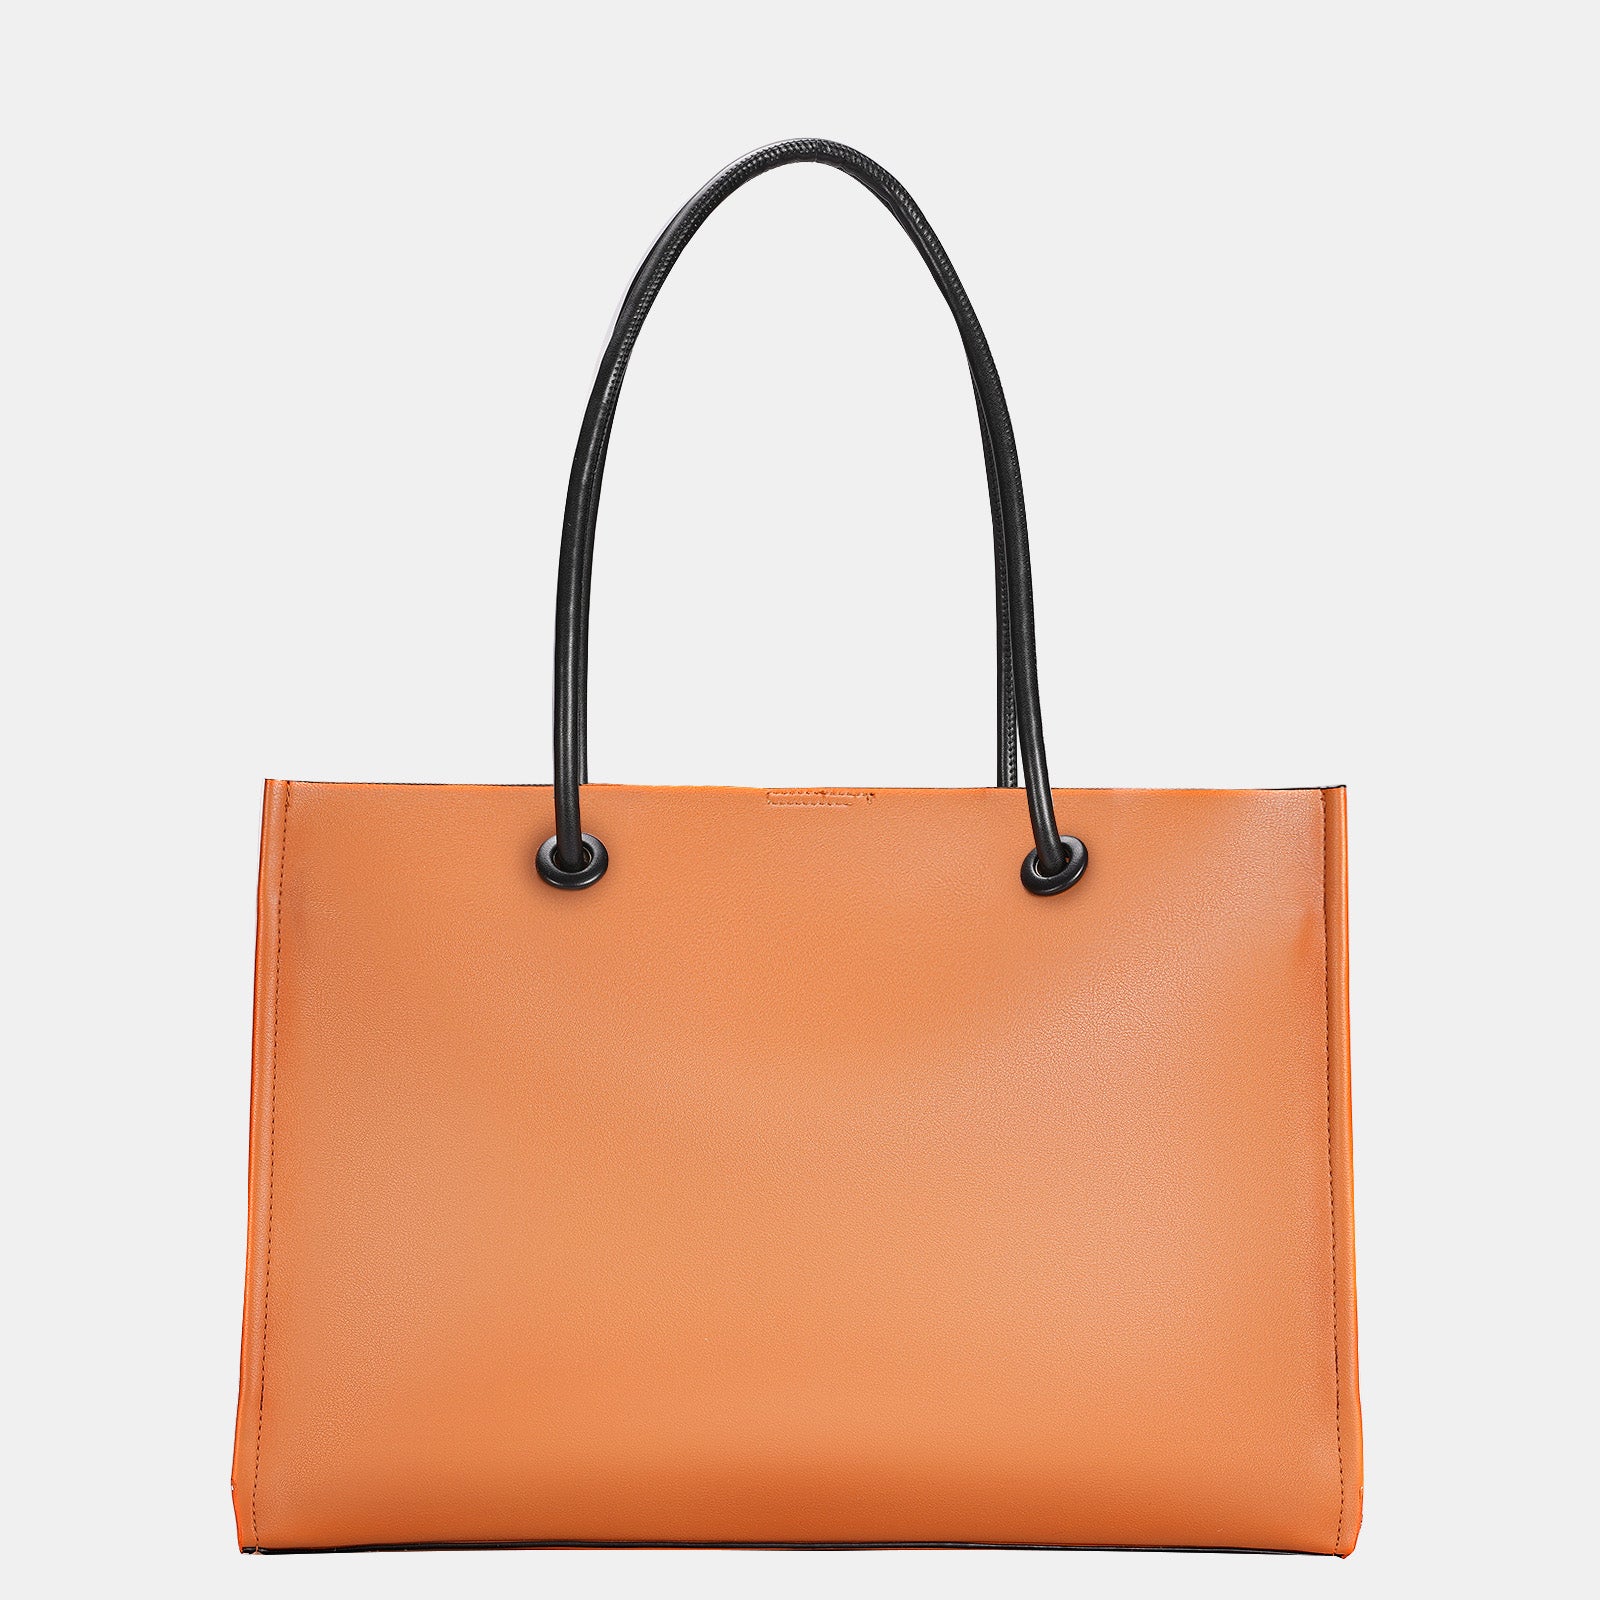 Bertasche Women's Leather Tote Bag Orange